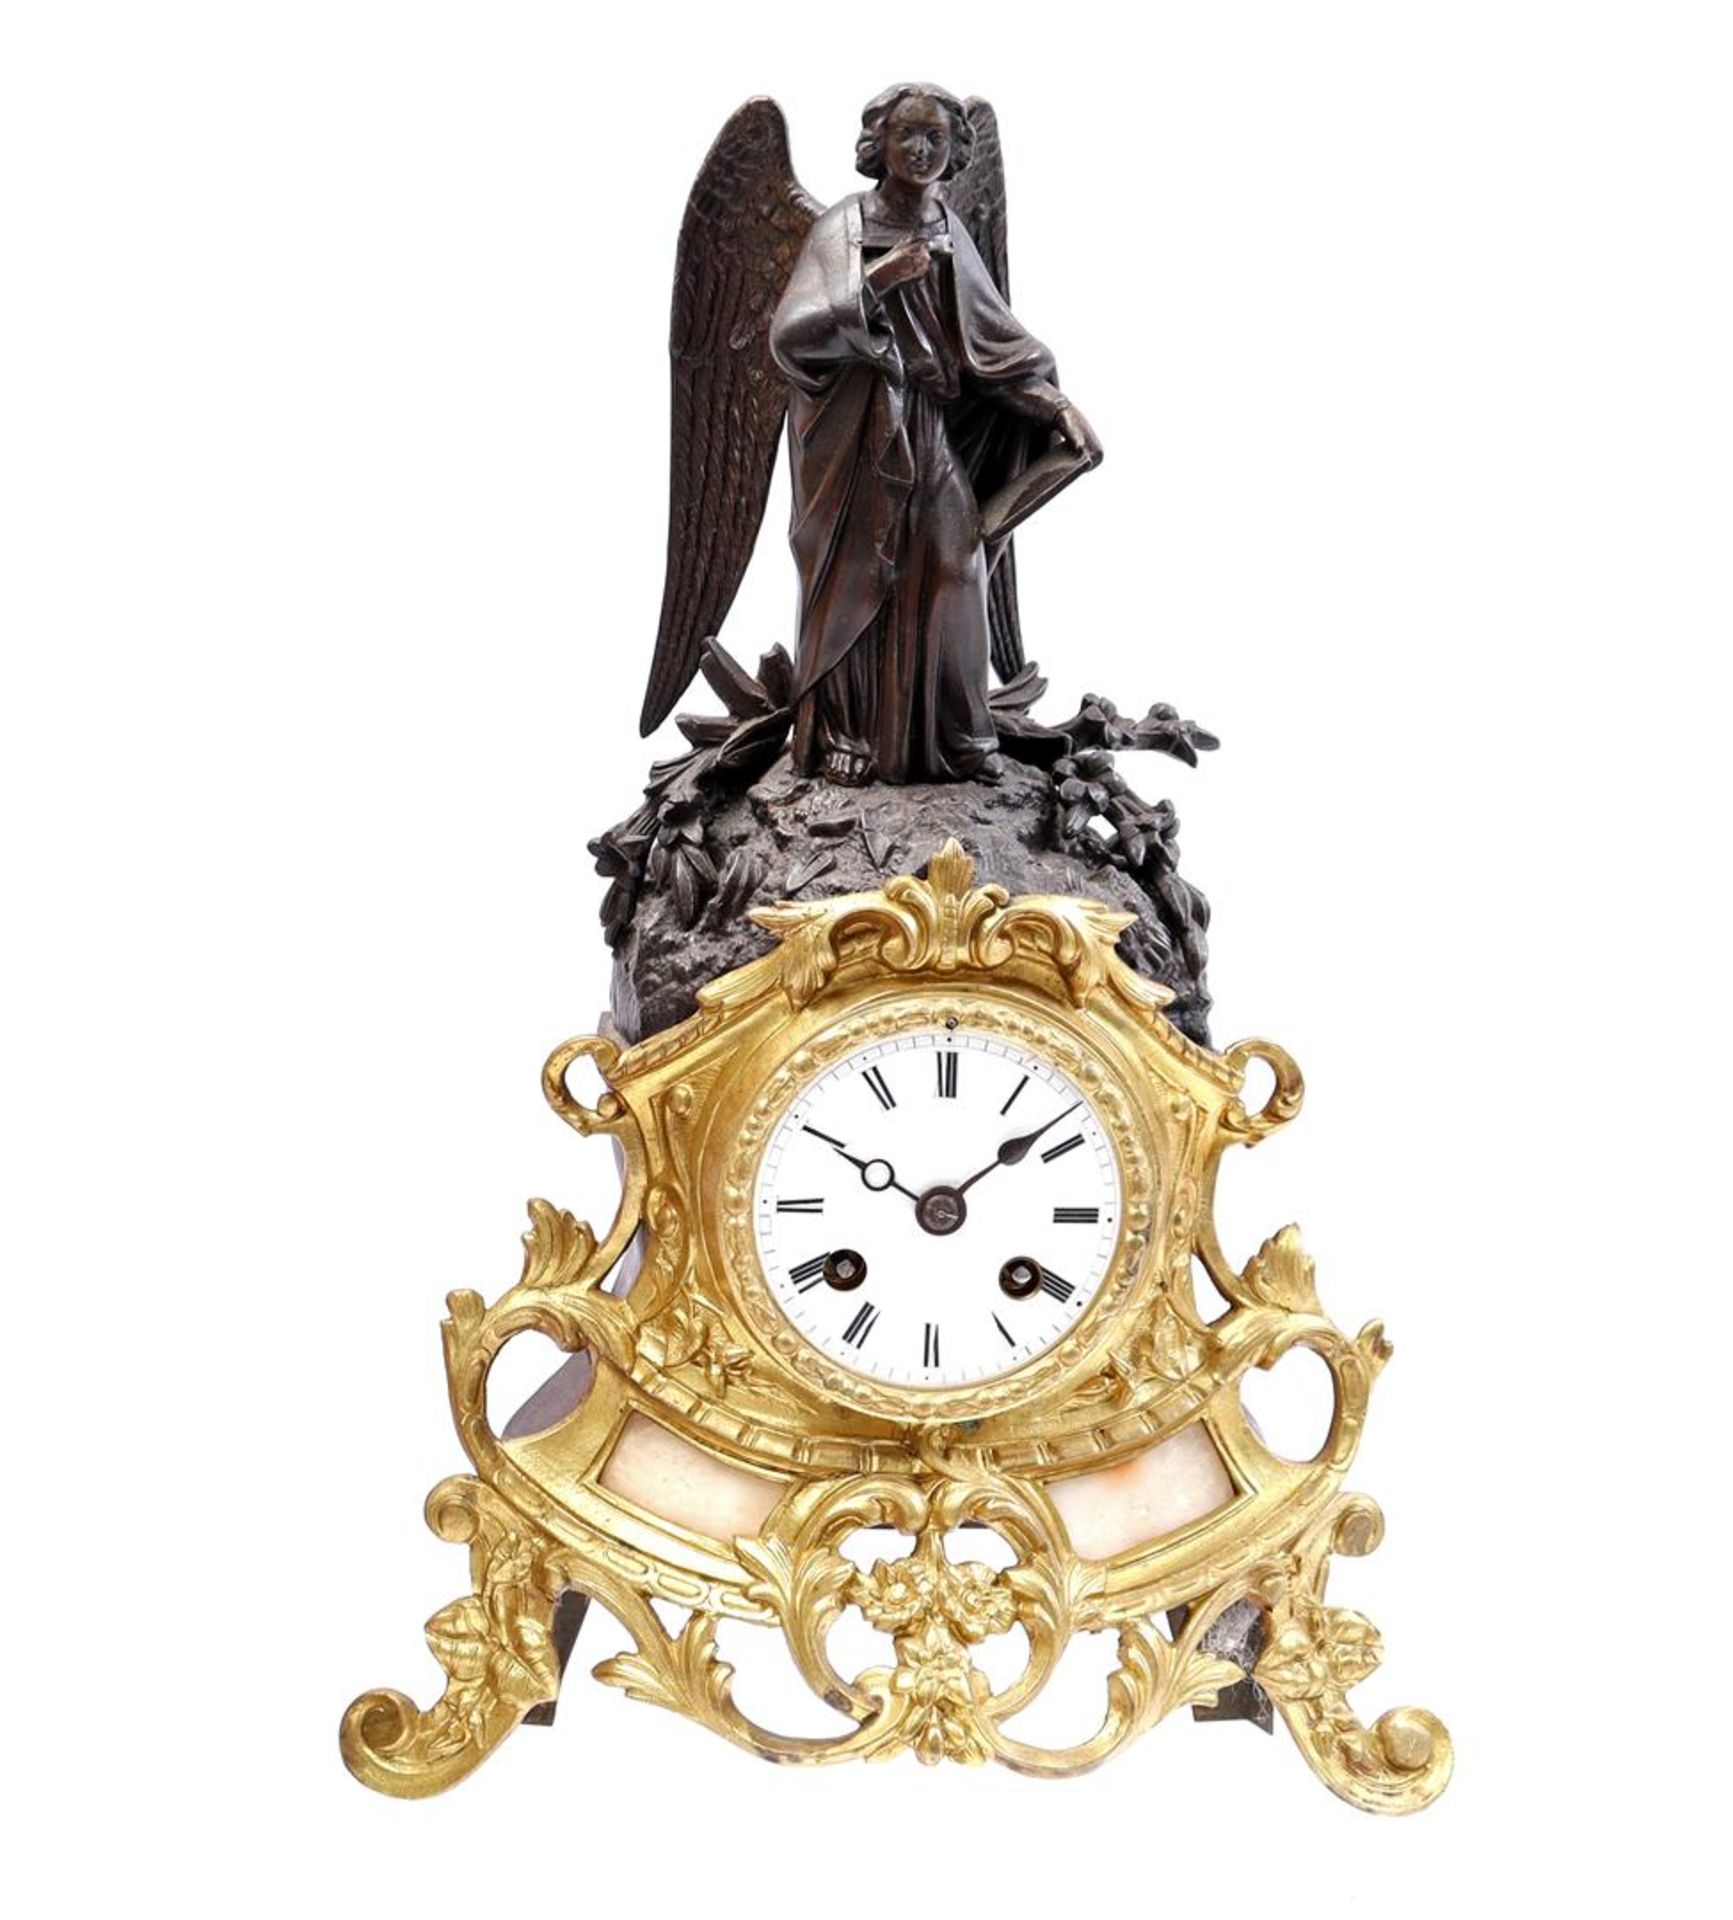 Table clock with zamak angel Gabriel on top